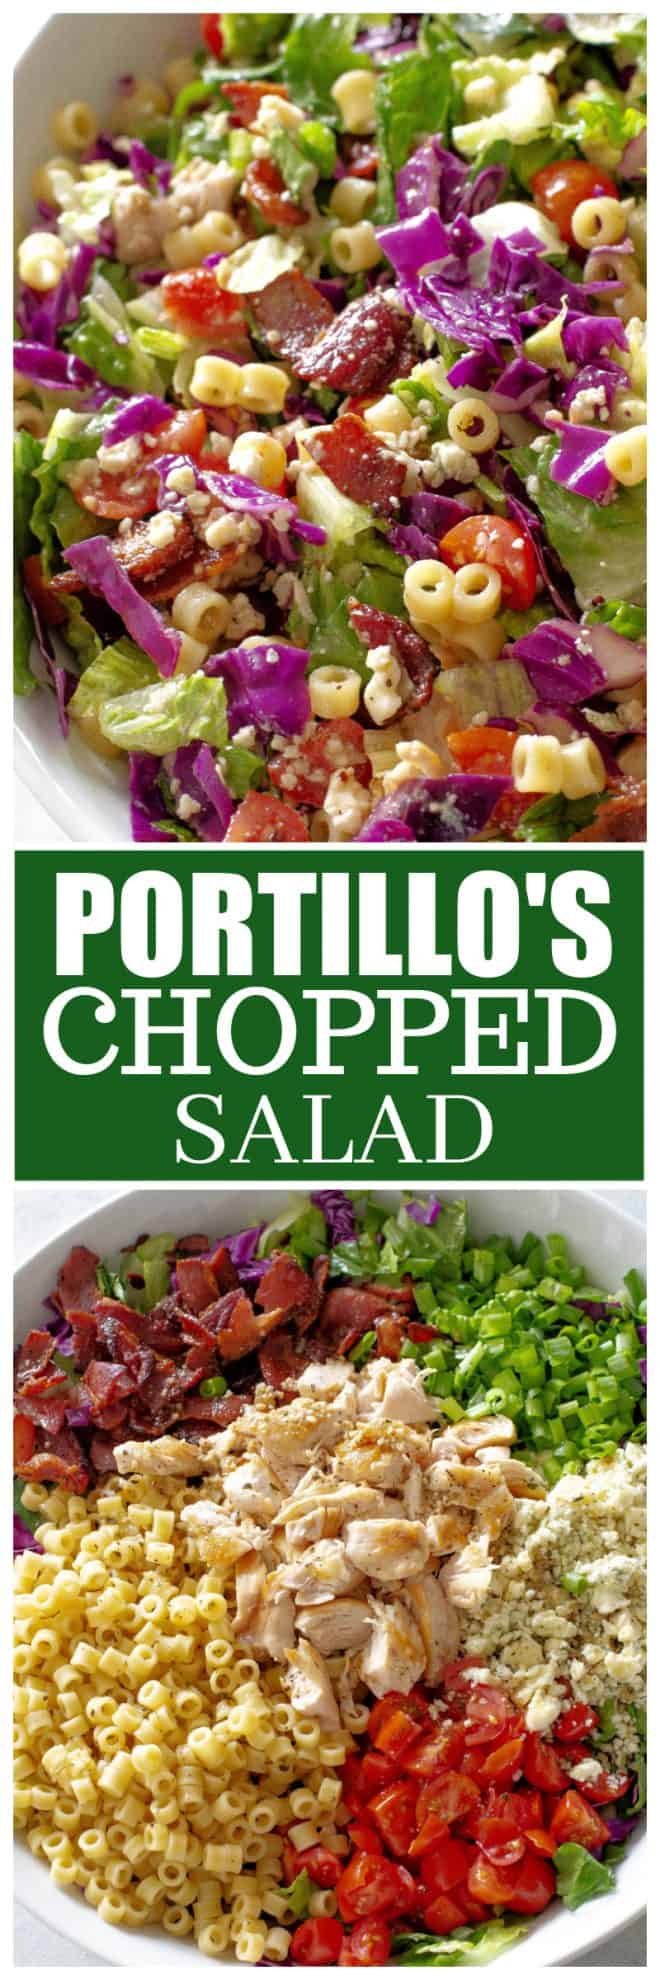 Portillo's Chopped Salad